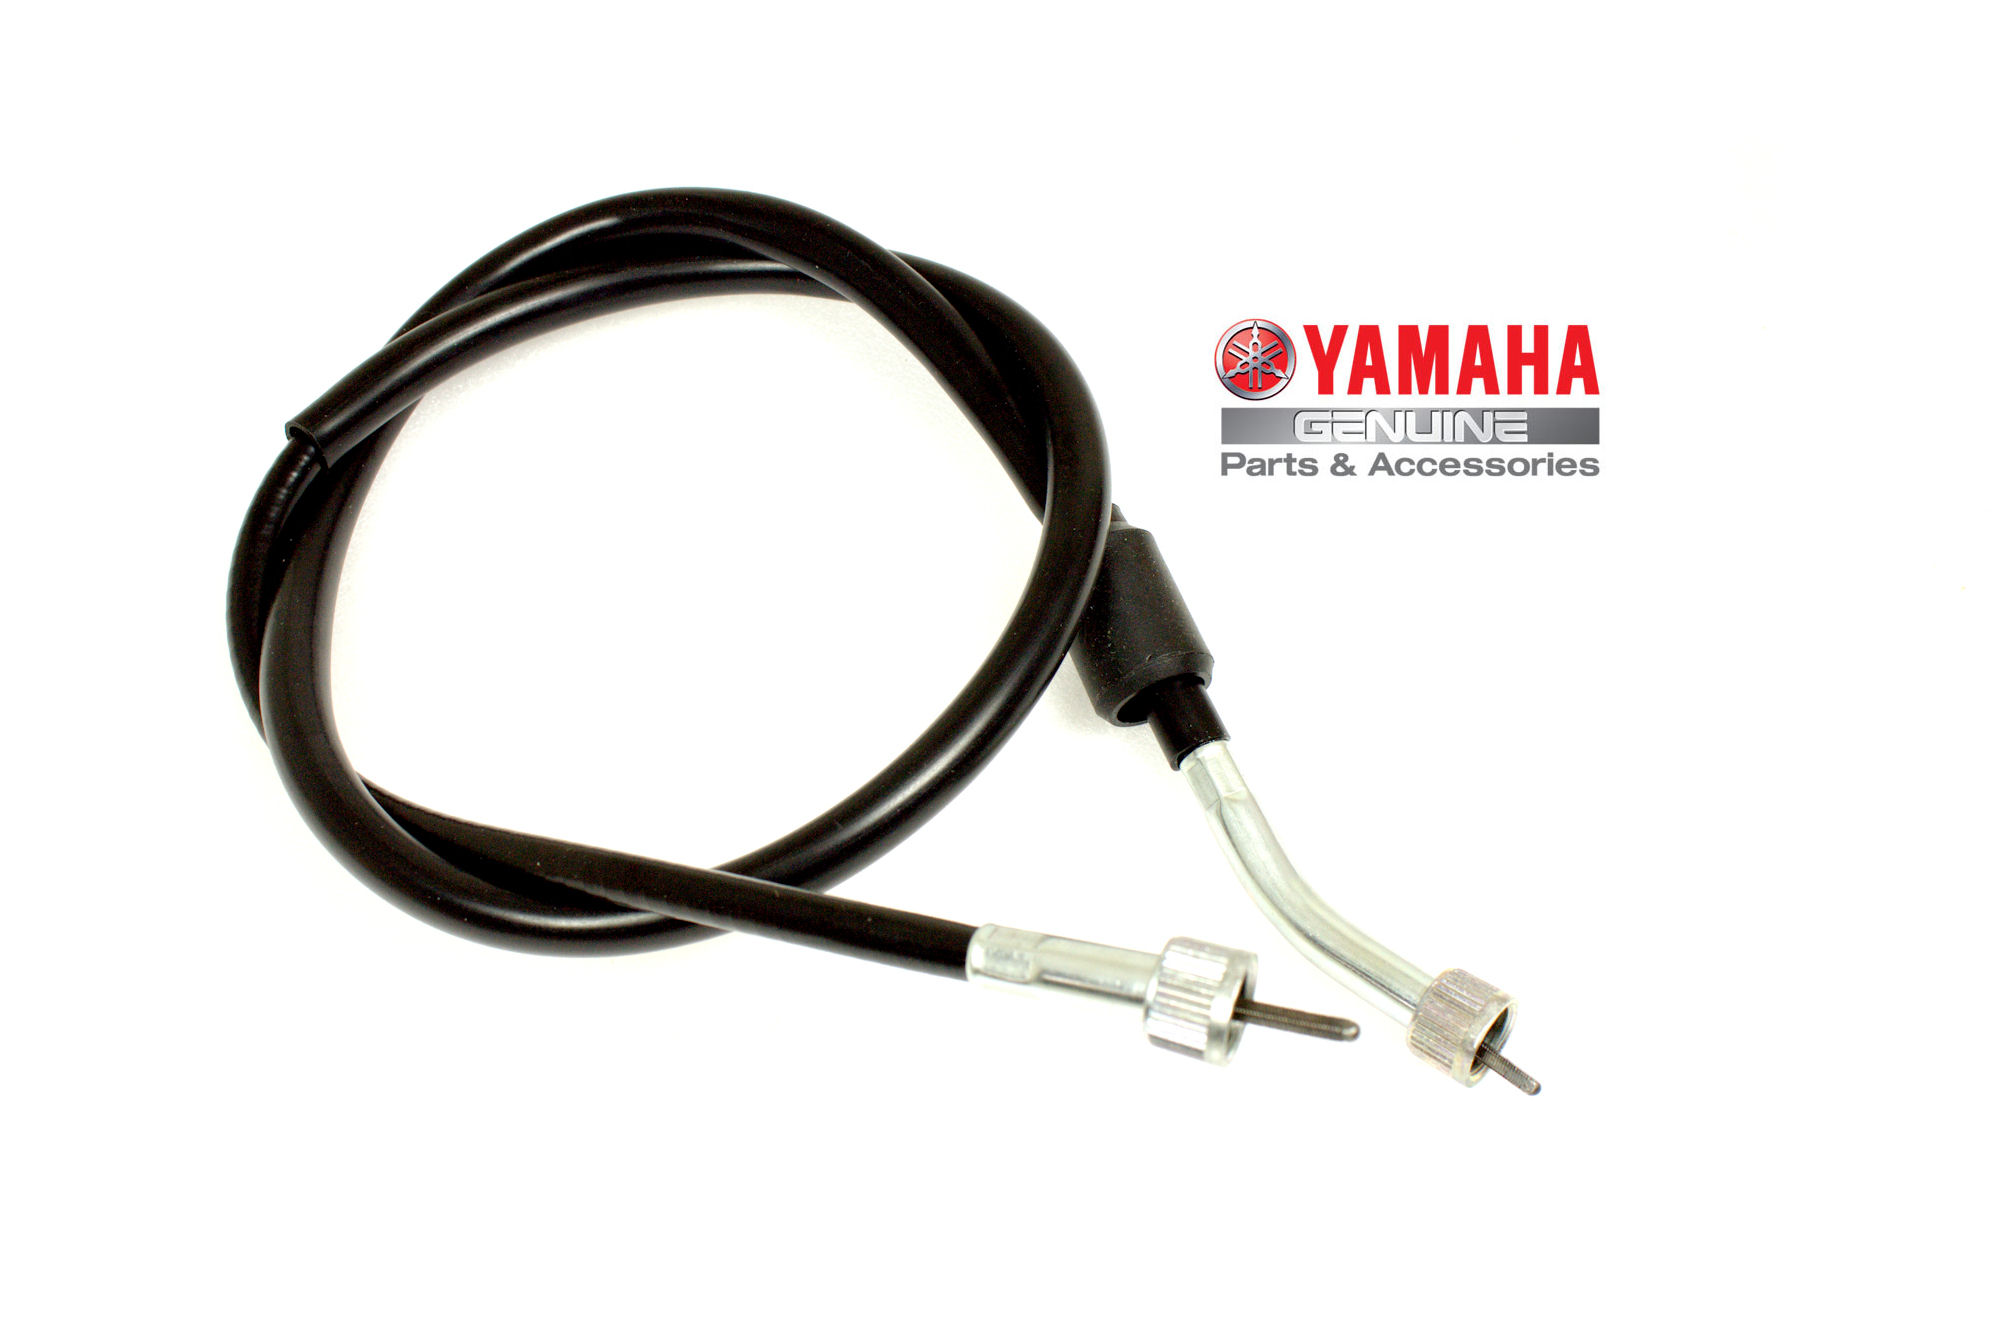 DT125R Speedo Cable Genuine Yamaha 